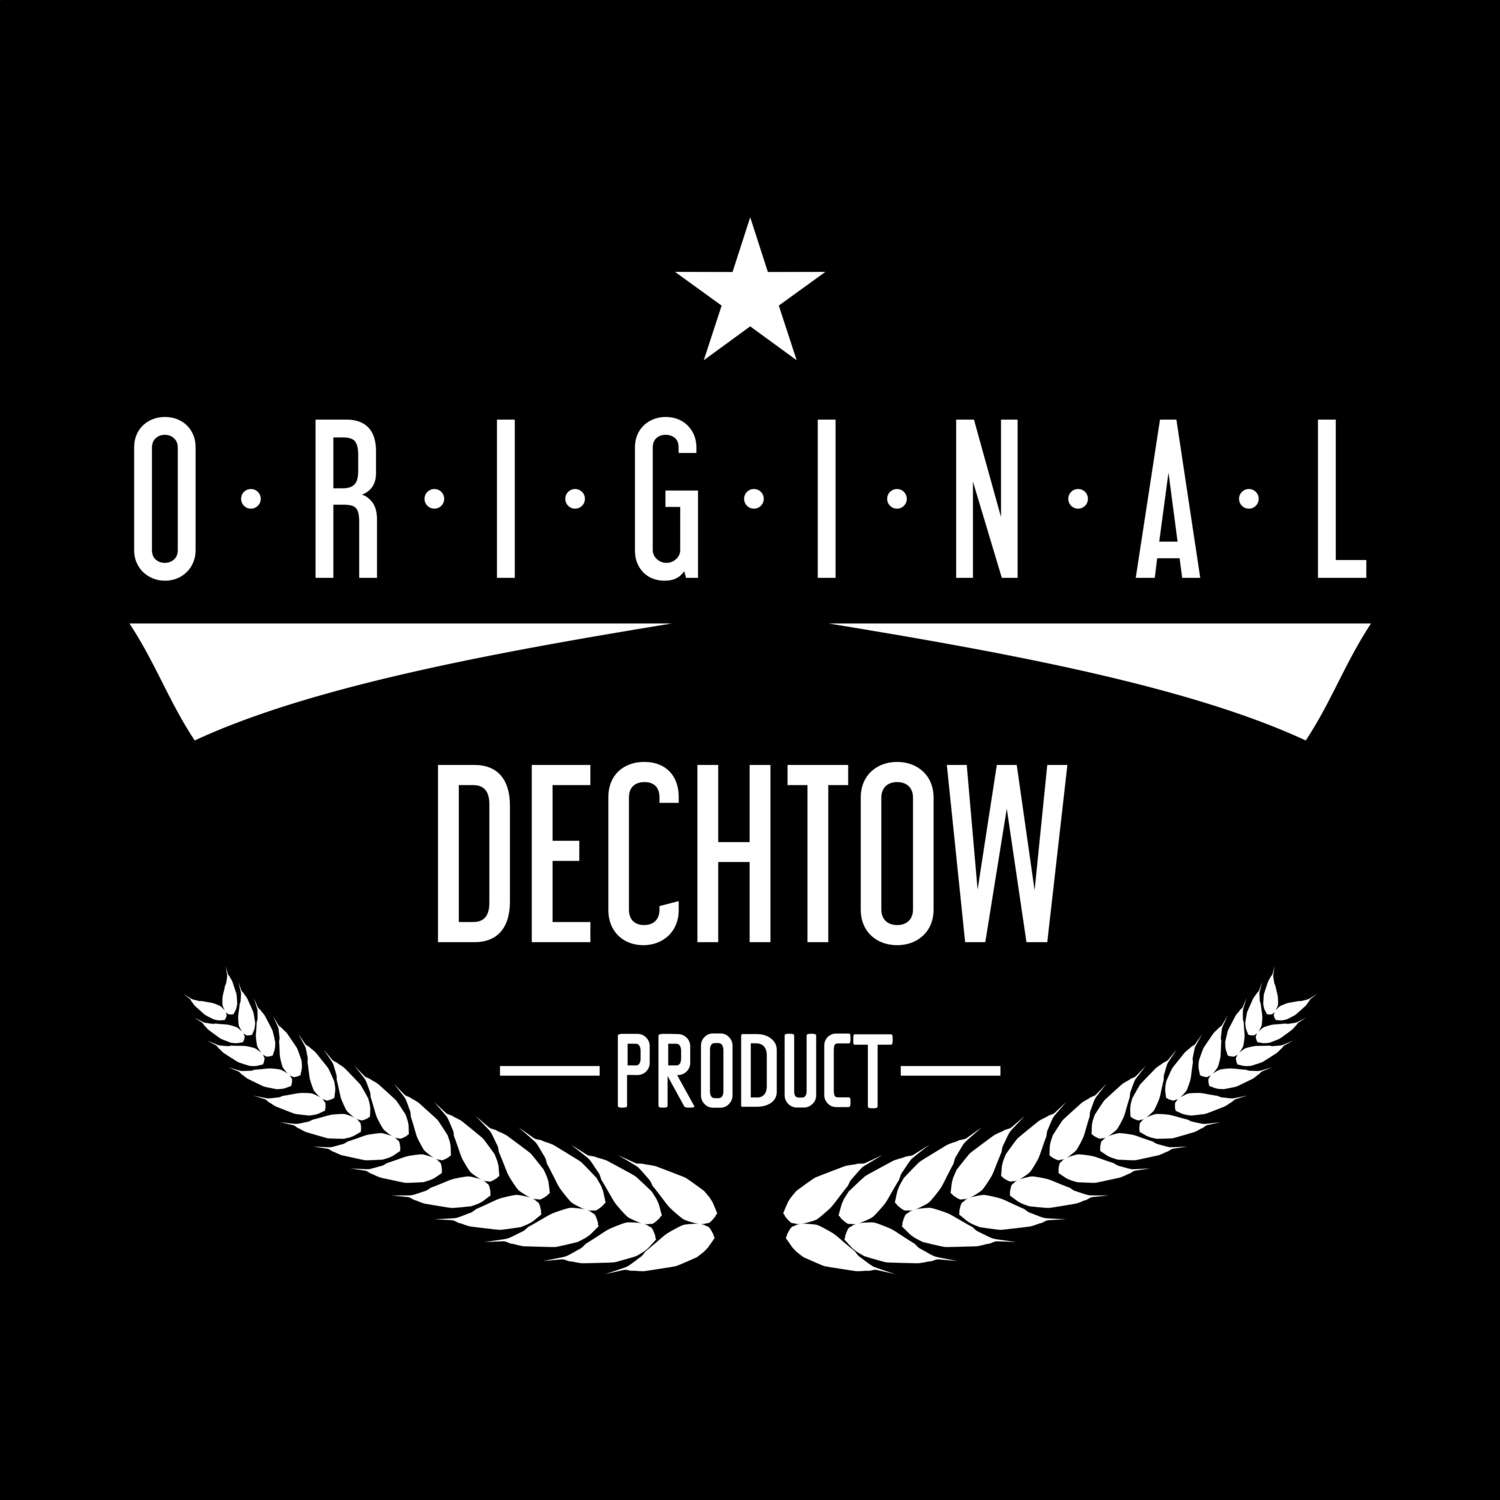 Dechtow T-Shirt »Original Product«